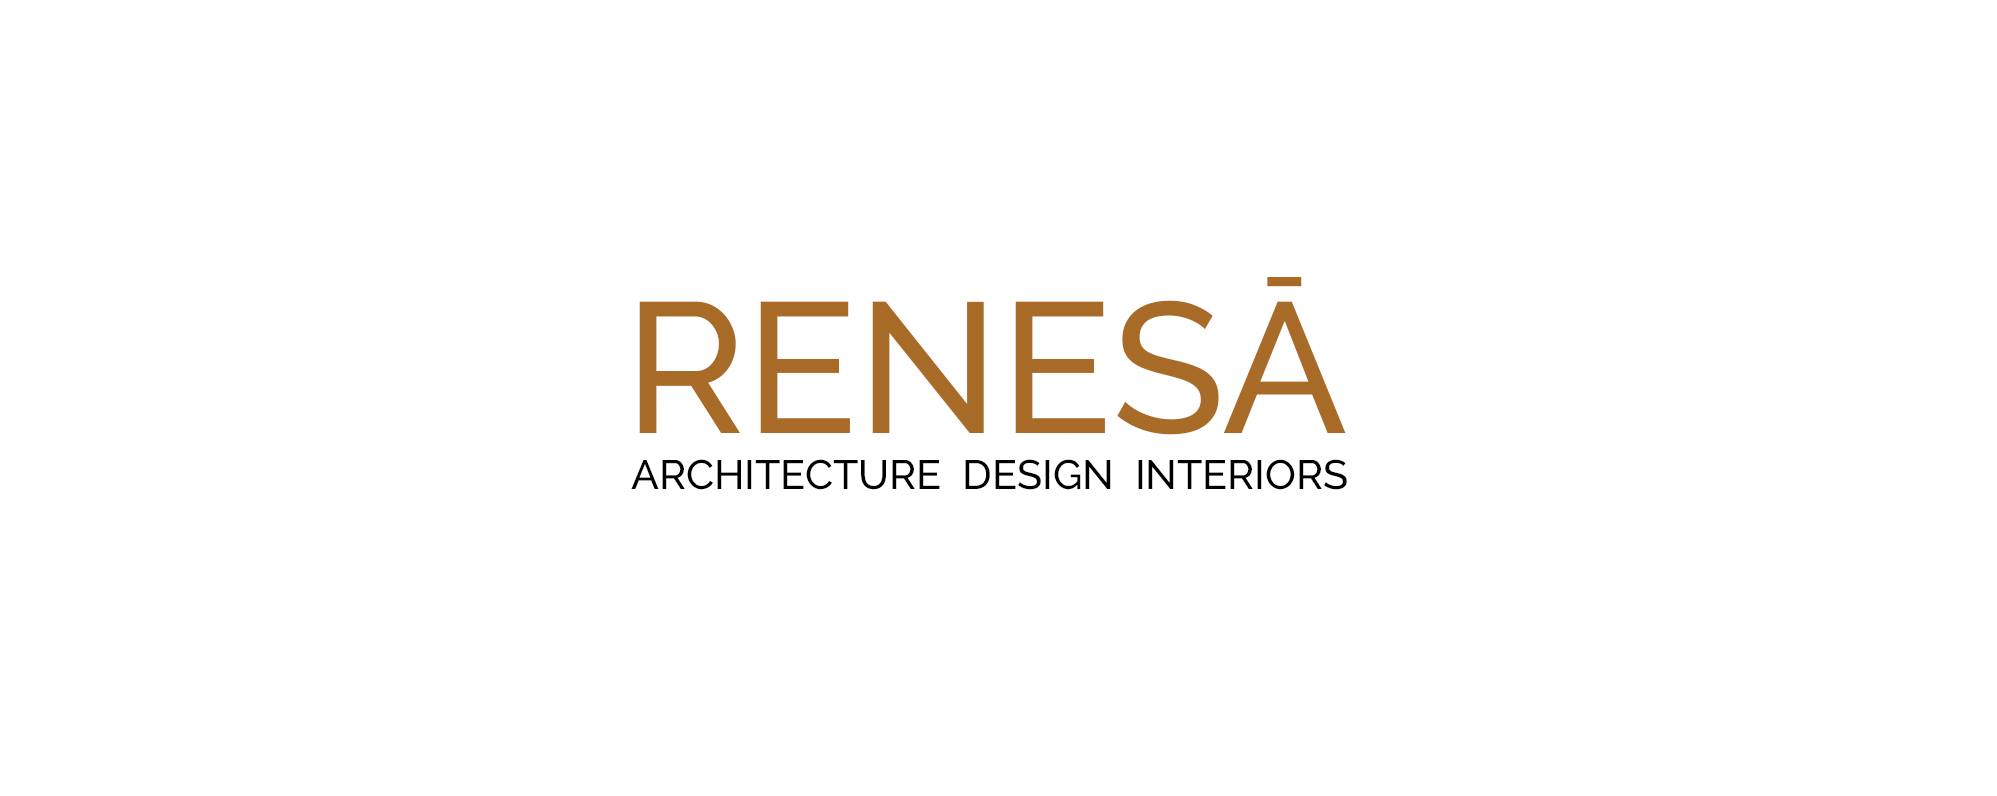 RENESA ARCHITECTURE DESIGN INTERIORS|Legal Services|Professional Services